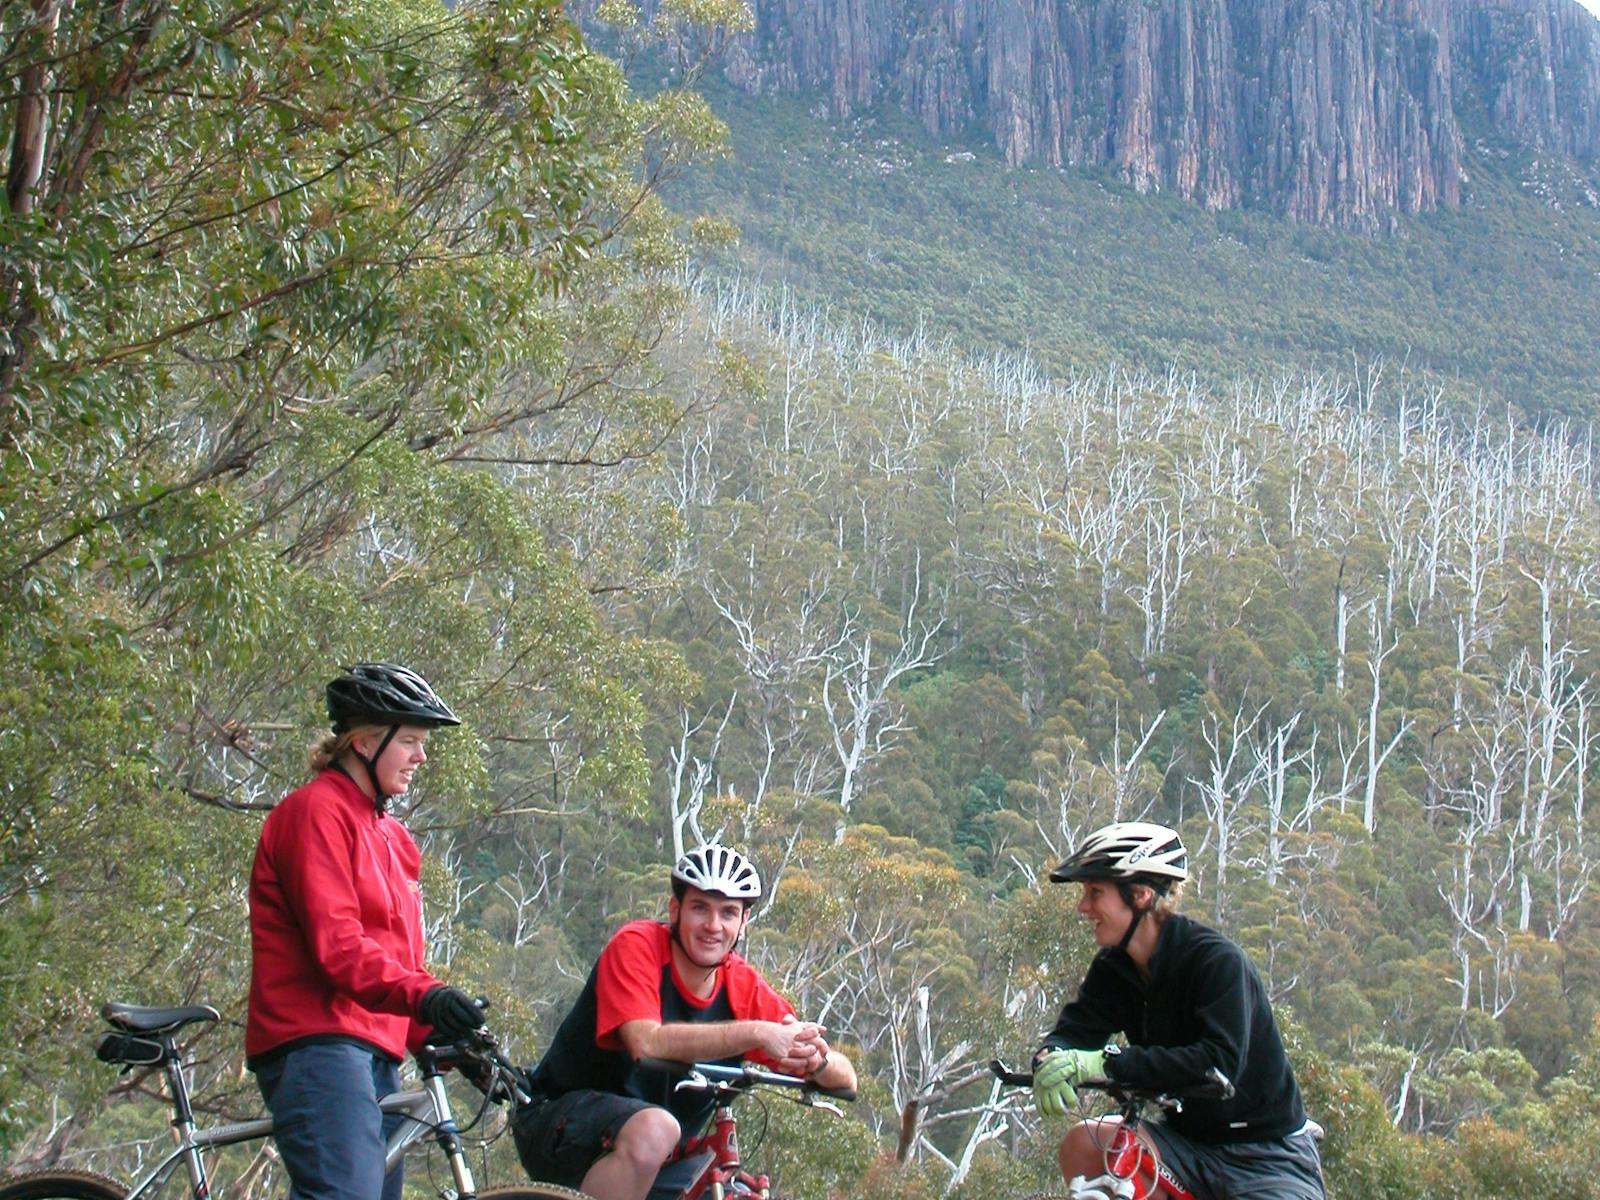 Mountain bike riders in front of kunanyi / Mount Wellington in Wellington Park